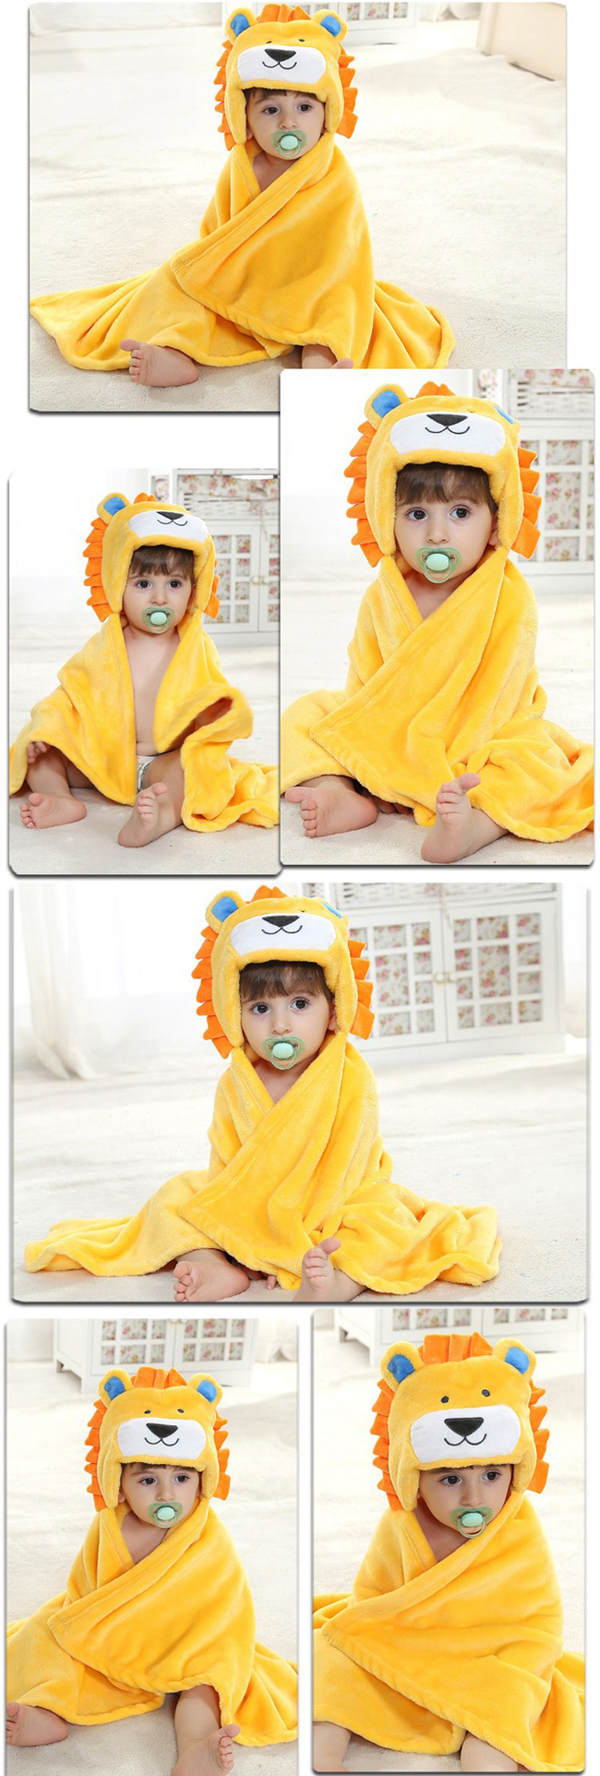 Cute Animal Cartoon Baby Infant Wrap Parisarc Soft Flannel Blanket Quilt Bathrobe